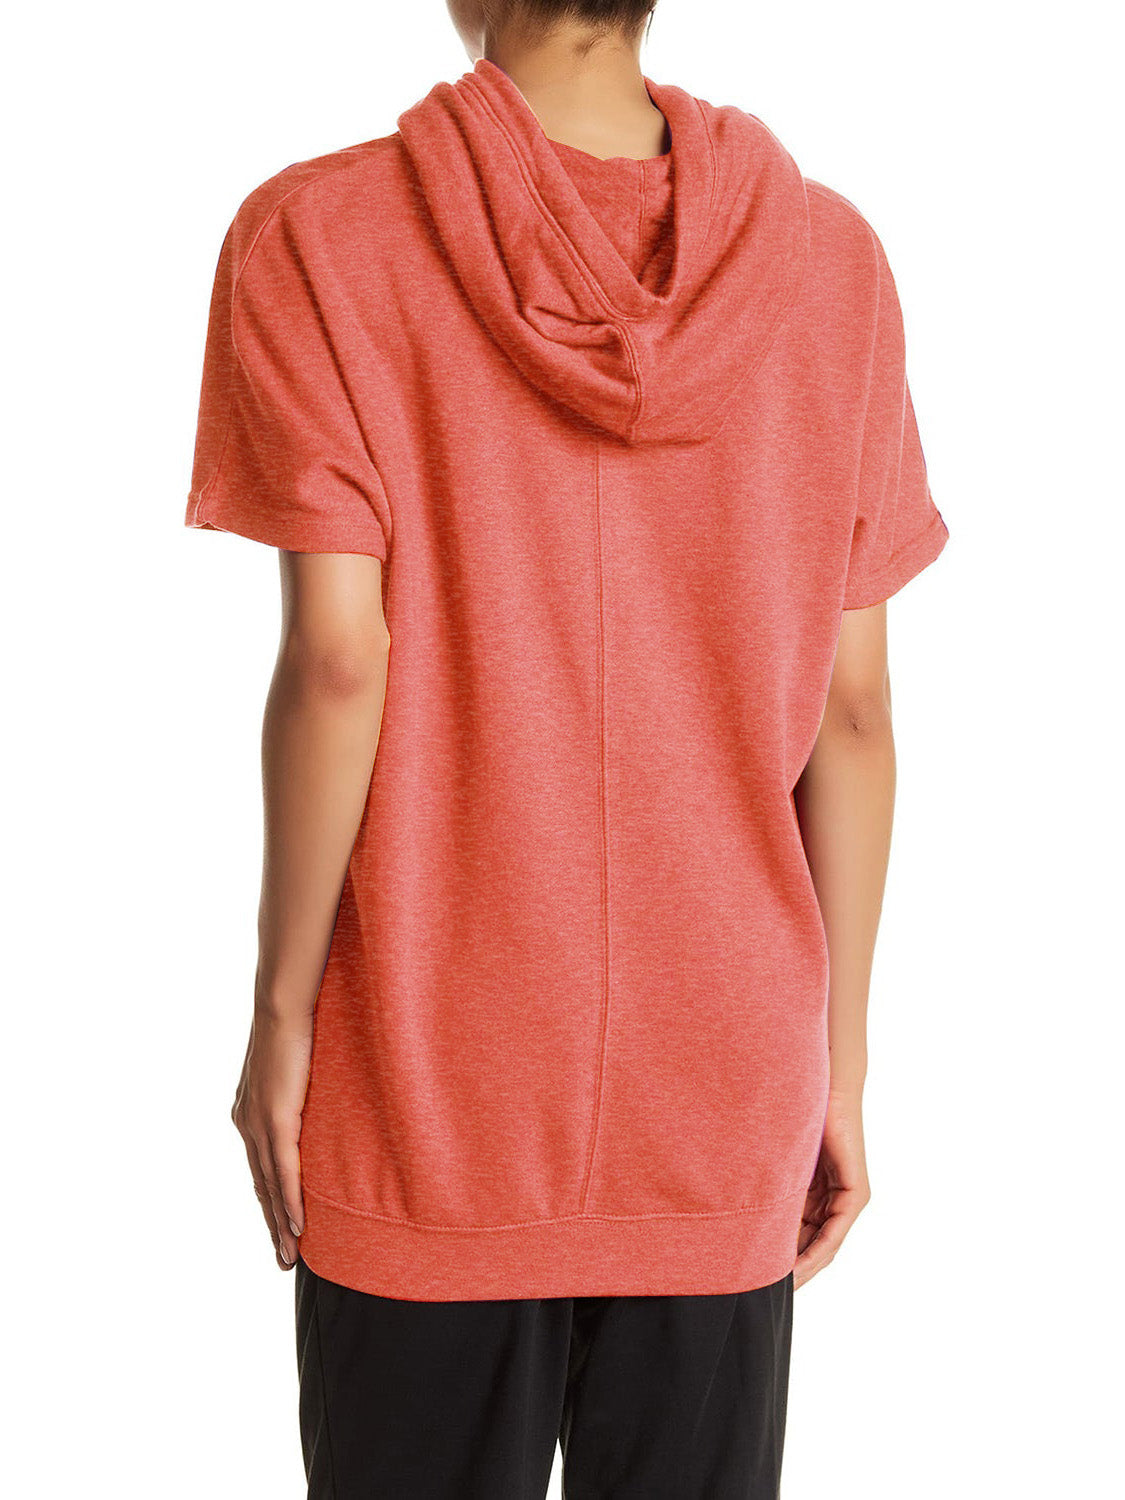 Nyc Polo Fleece Short Sleeve Hoodie For Ladies-Carrot Red Melange-SP1550